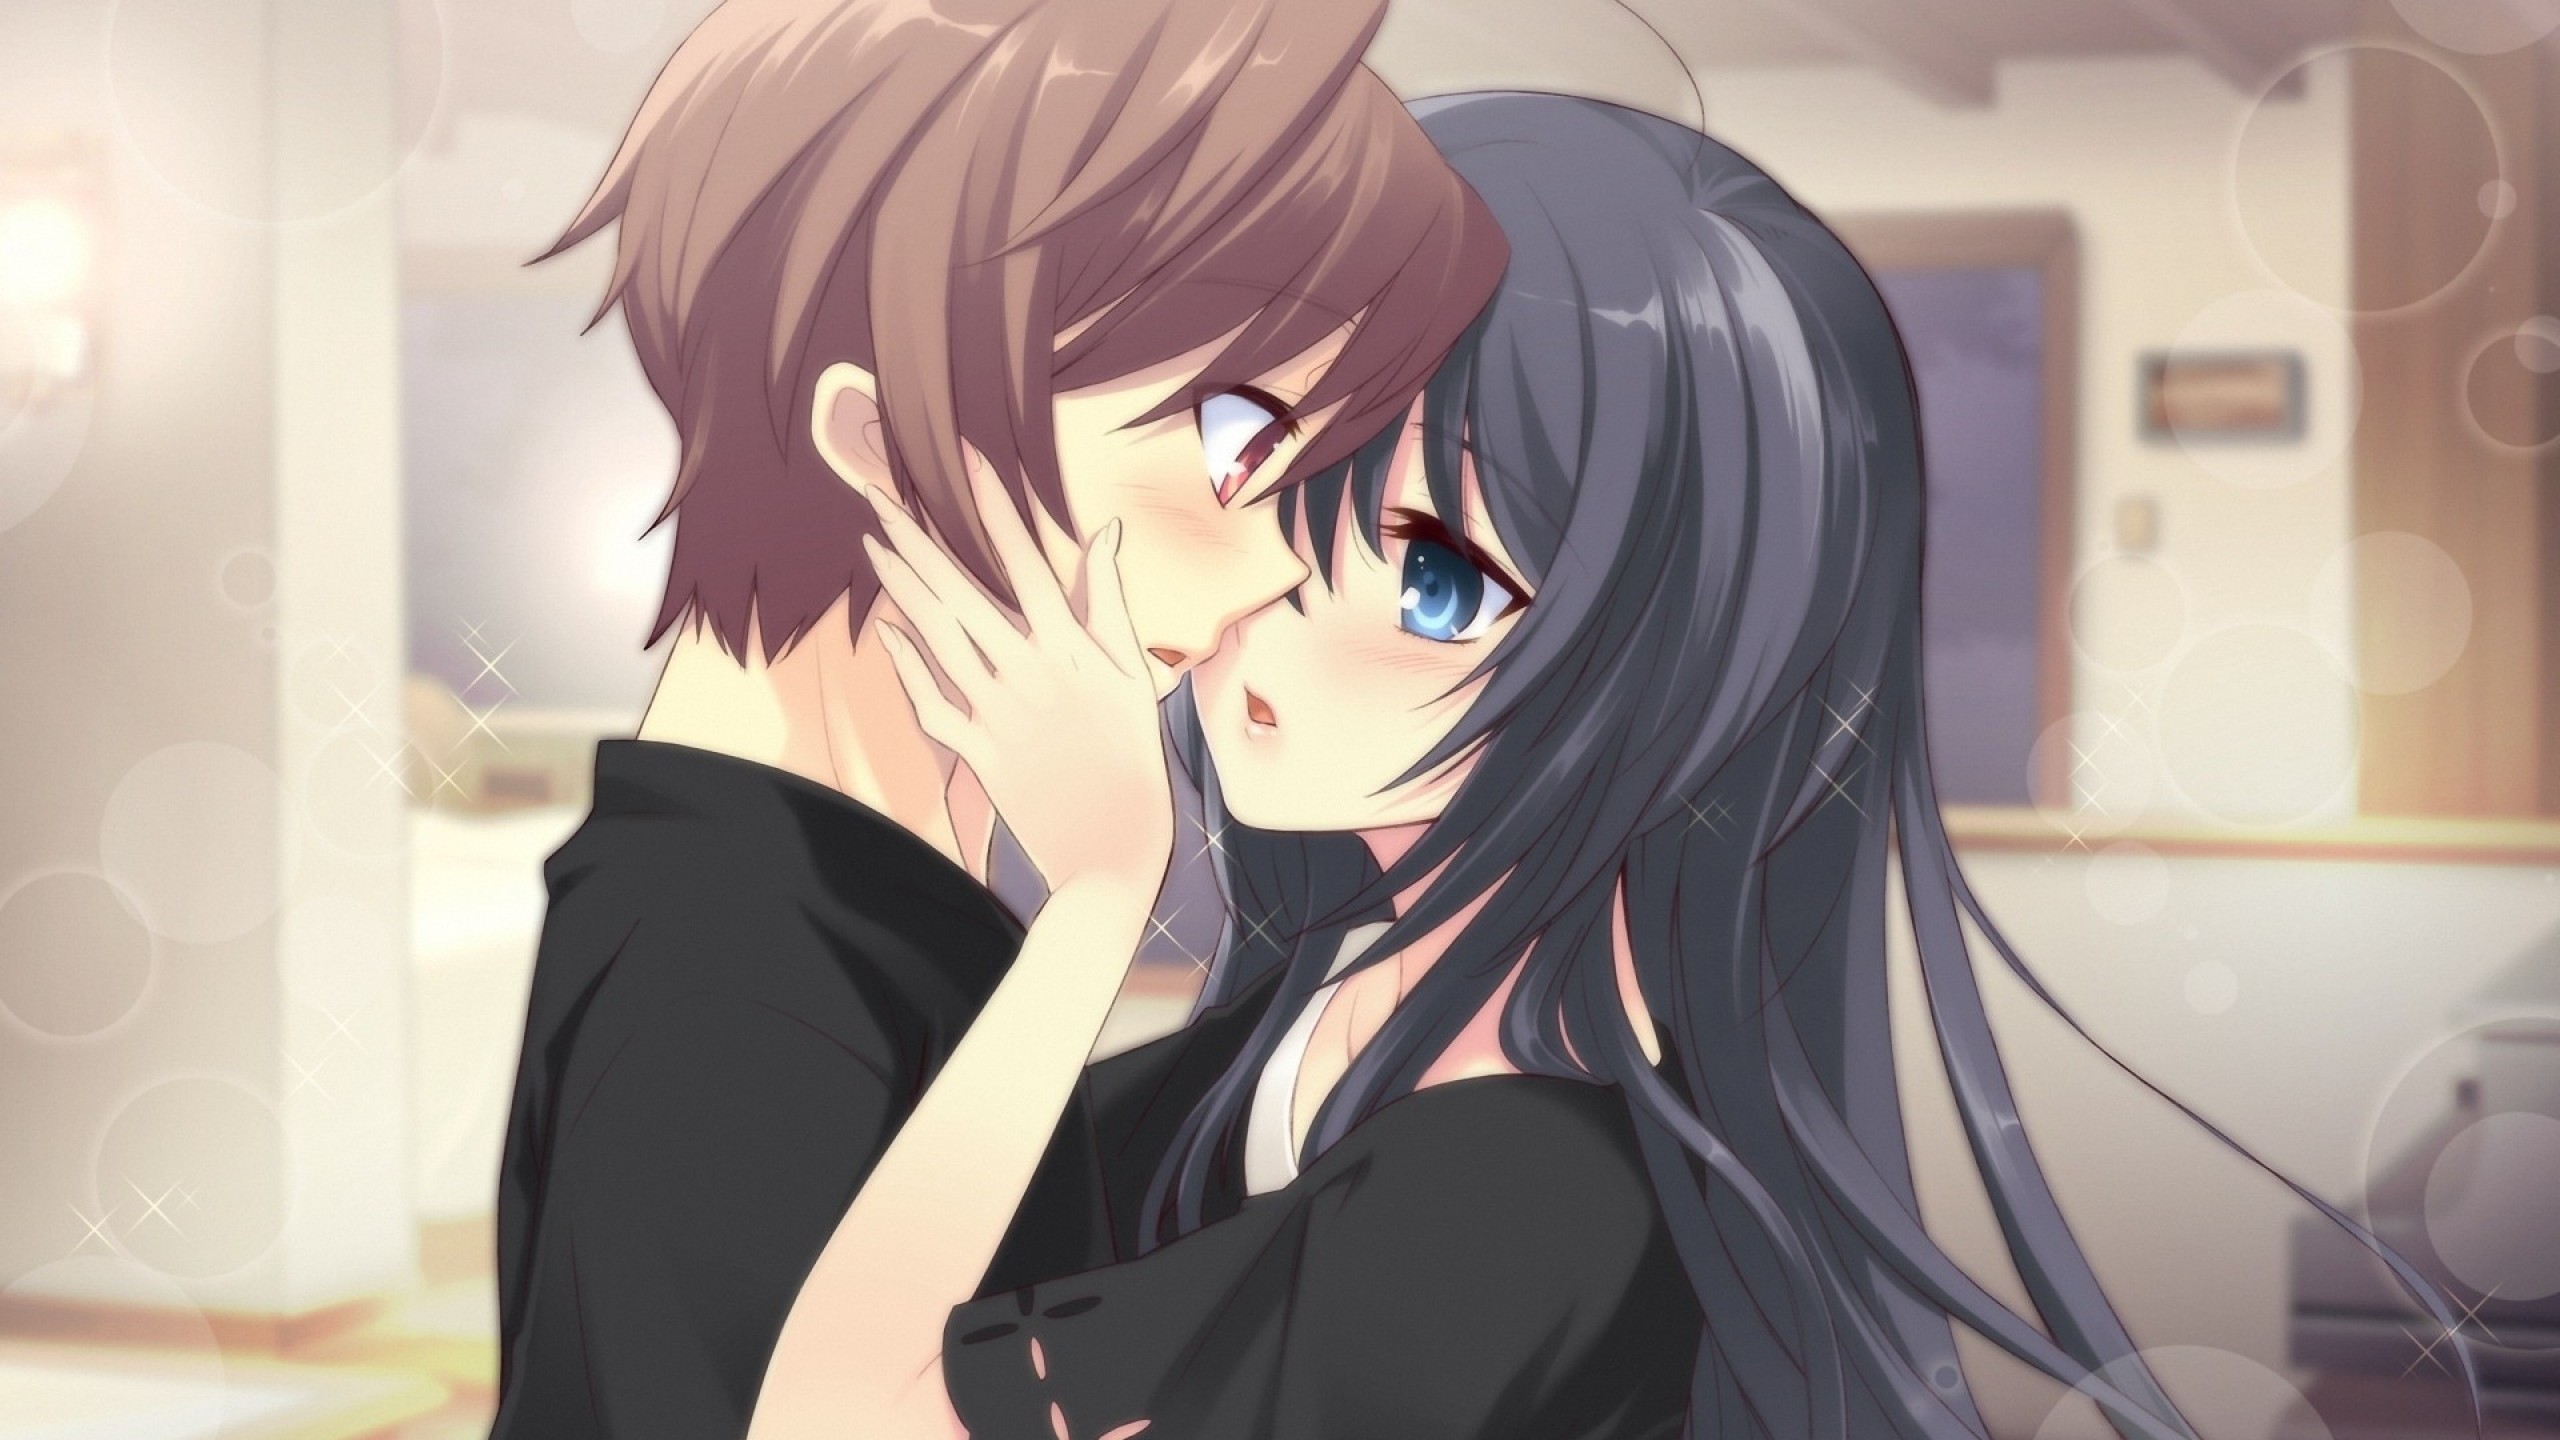 Anime Art Couple Boy Guy Girl Love Cute Kawaii Description - Anime Cute  Couples Kissing - 2560x1440 Wallpaper 